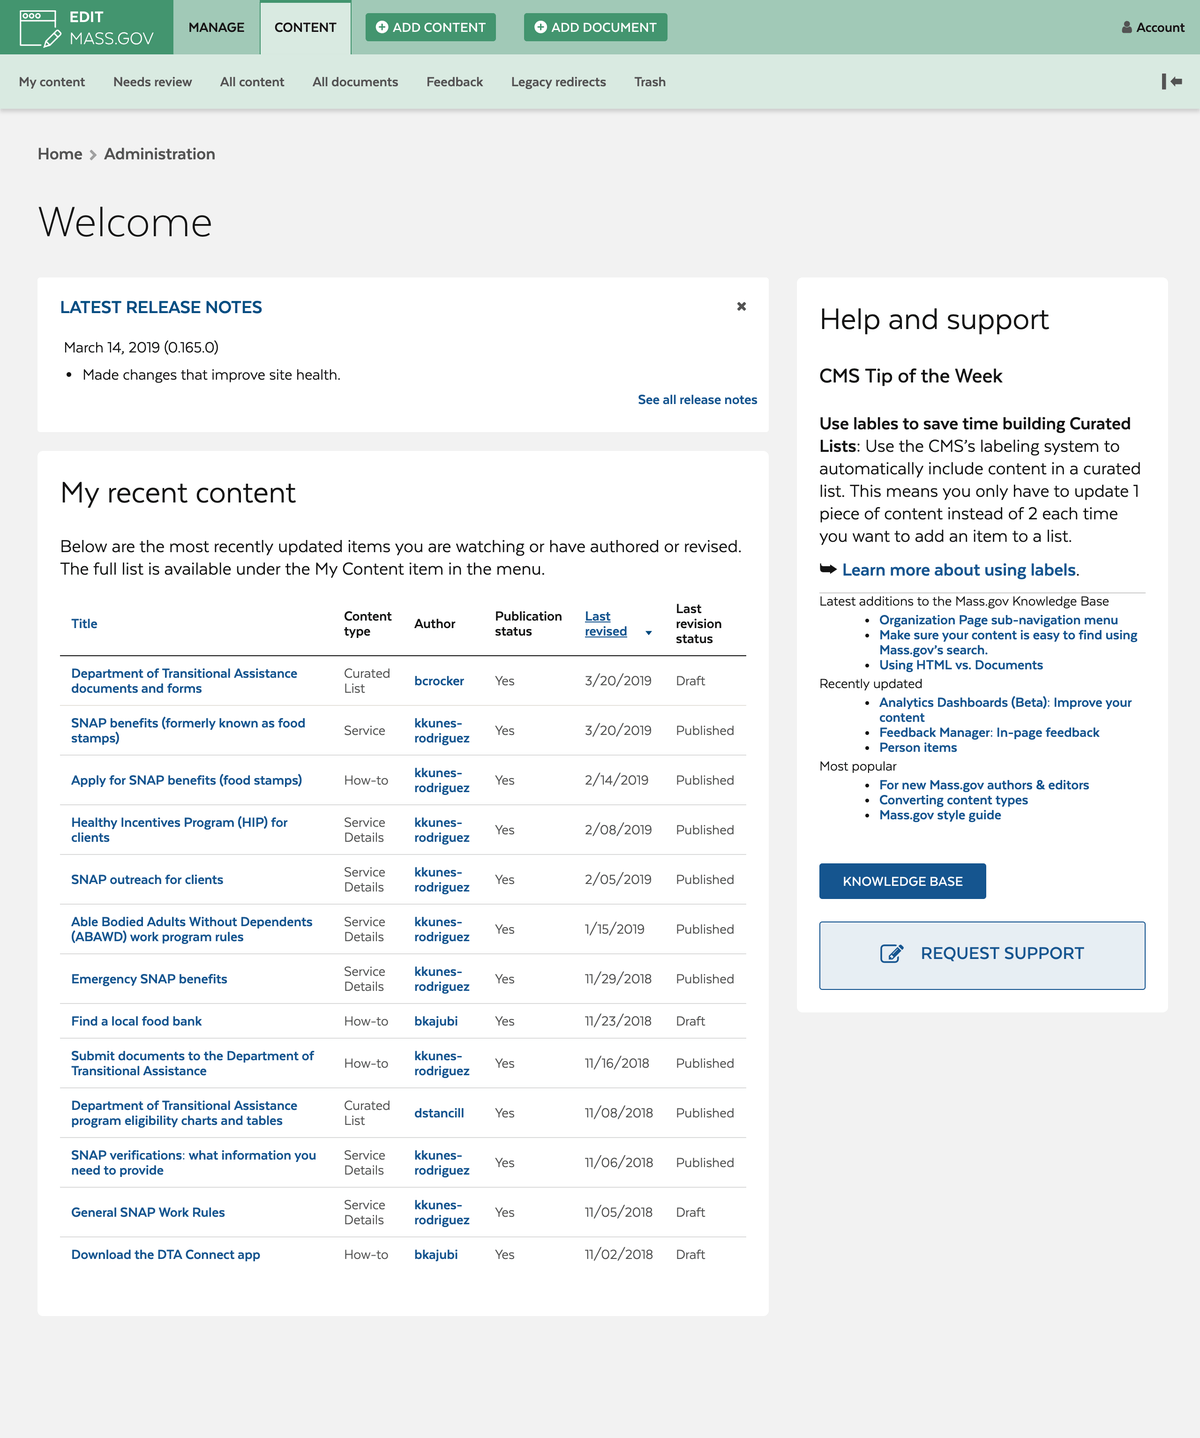 The Mass.gov Admin Theme homepage